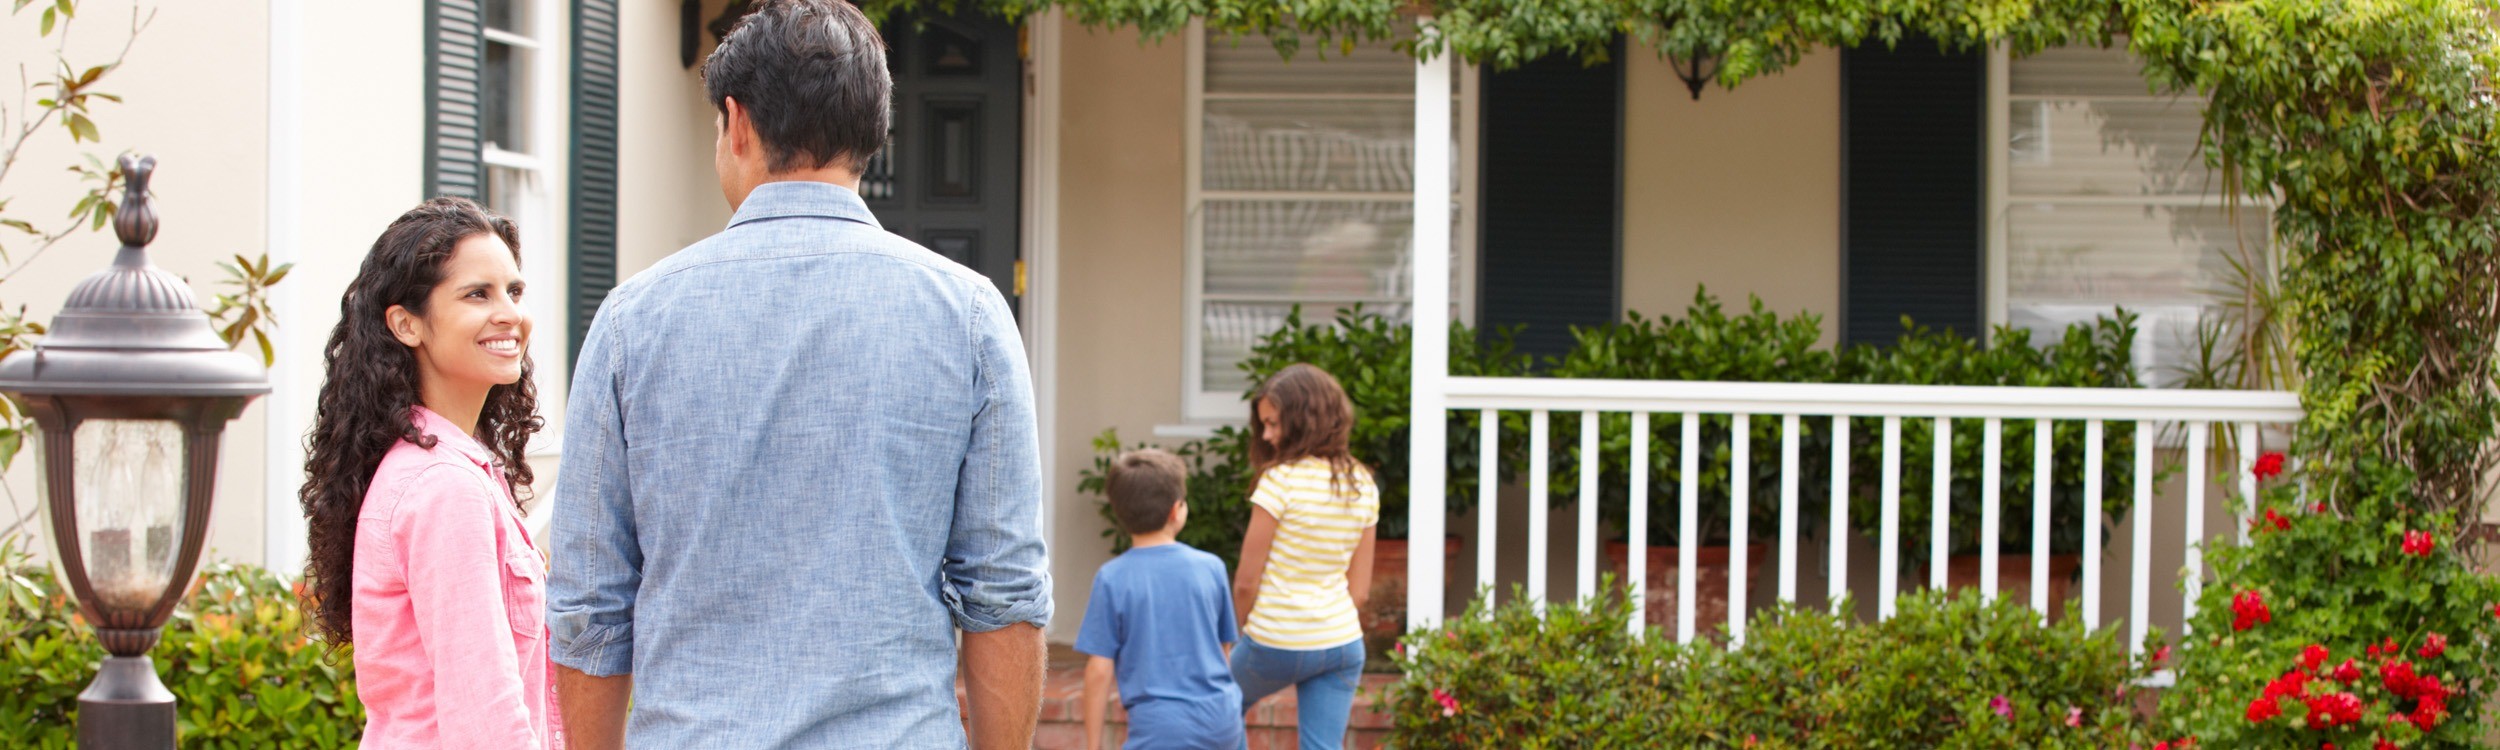 Apollo Single Family Homeowners Insurance